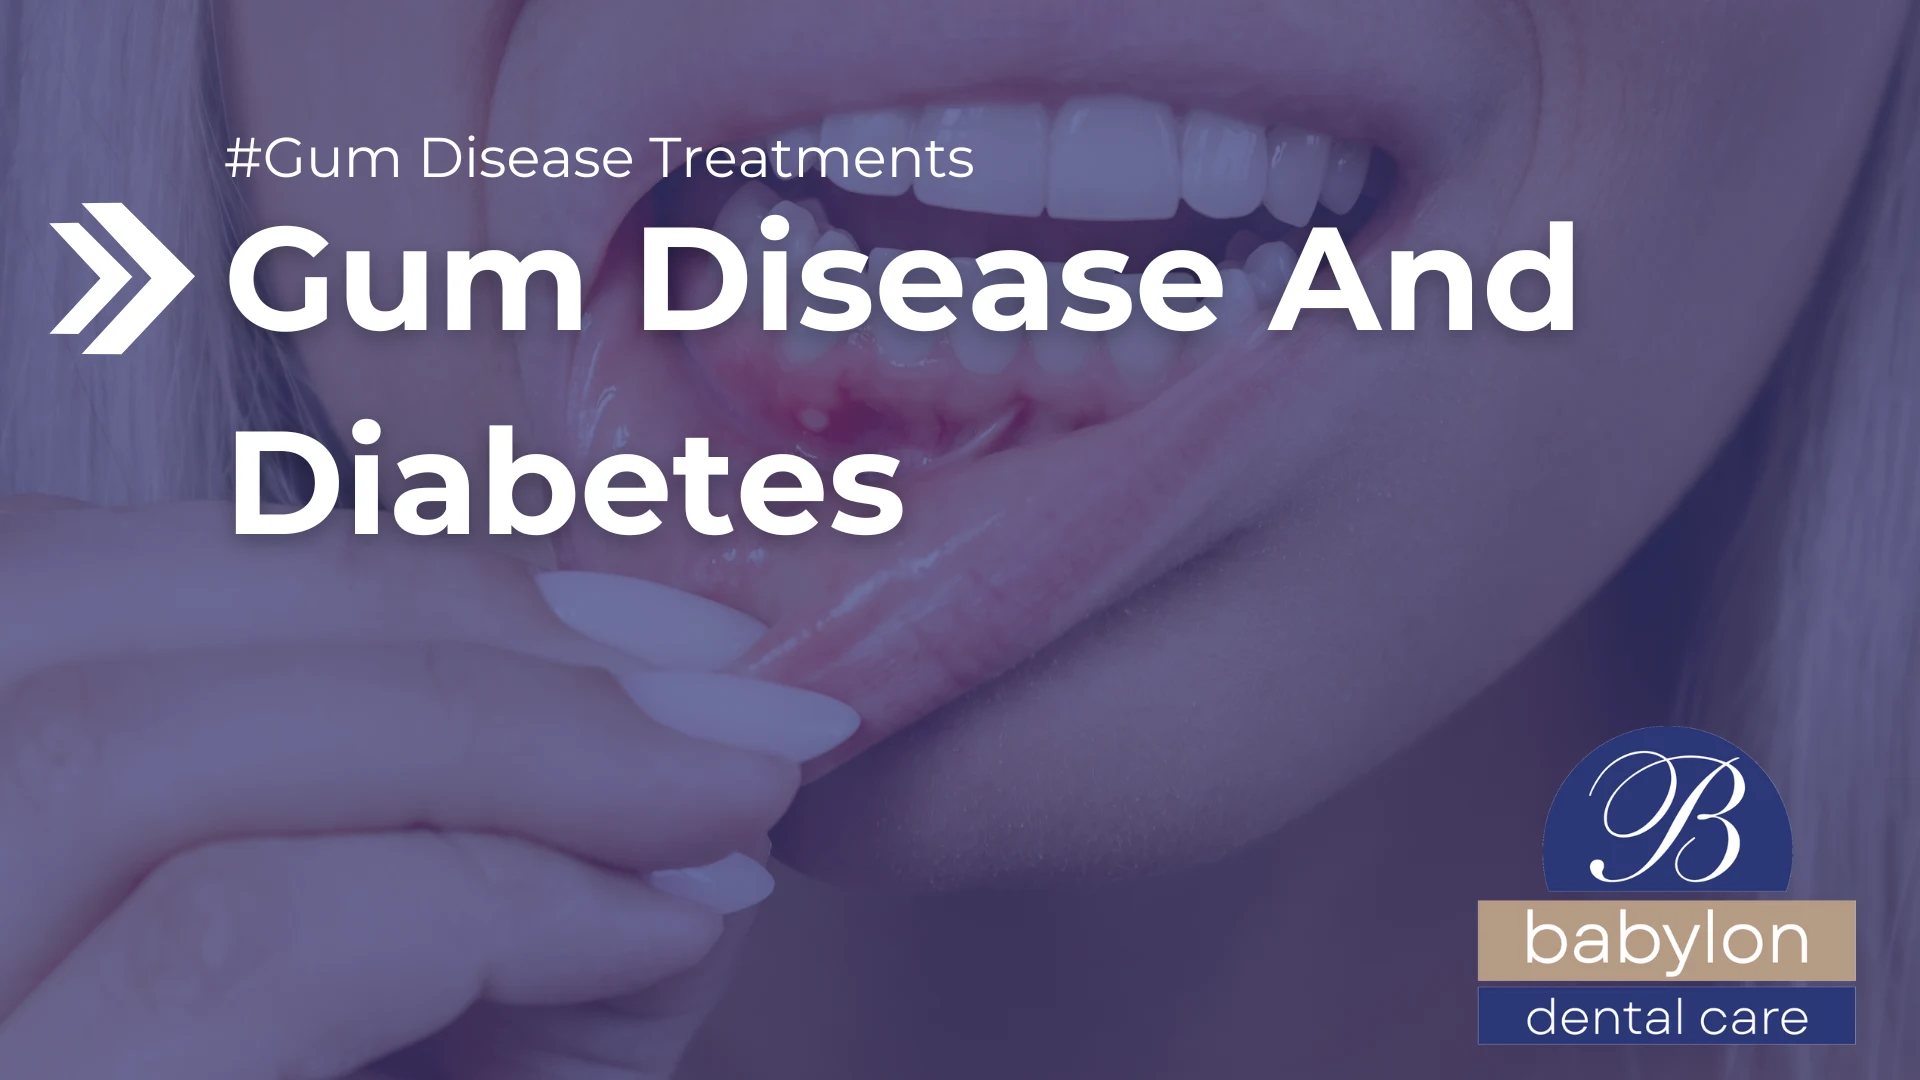 Gum Disease And Diabetes Image - new logo